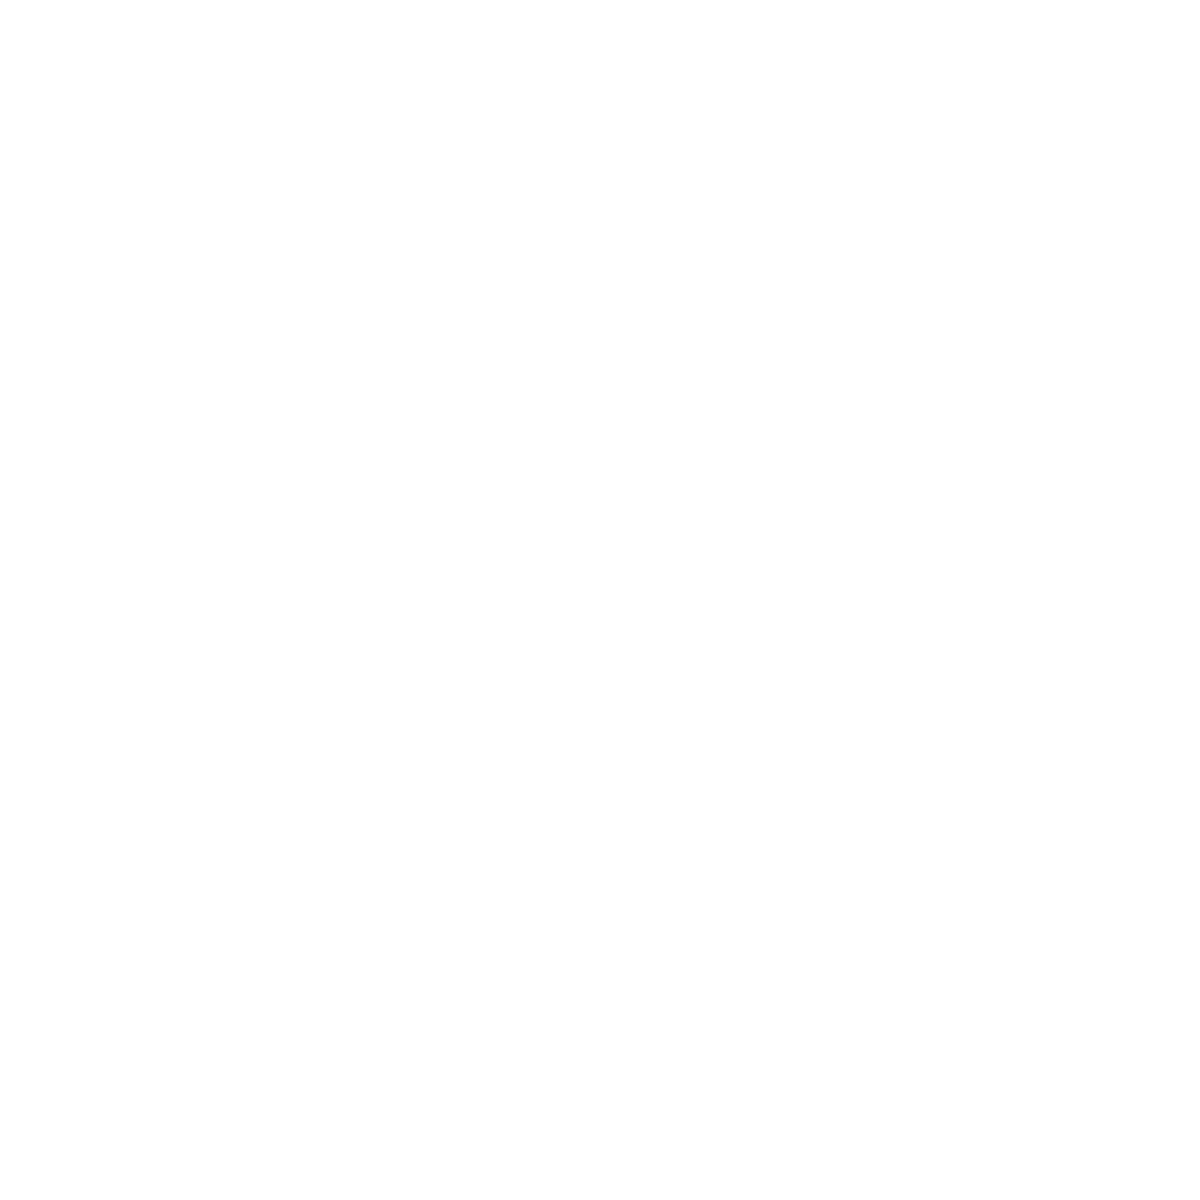 zabeauty - Make Up & Hair | Braut- & Eeventstyling